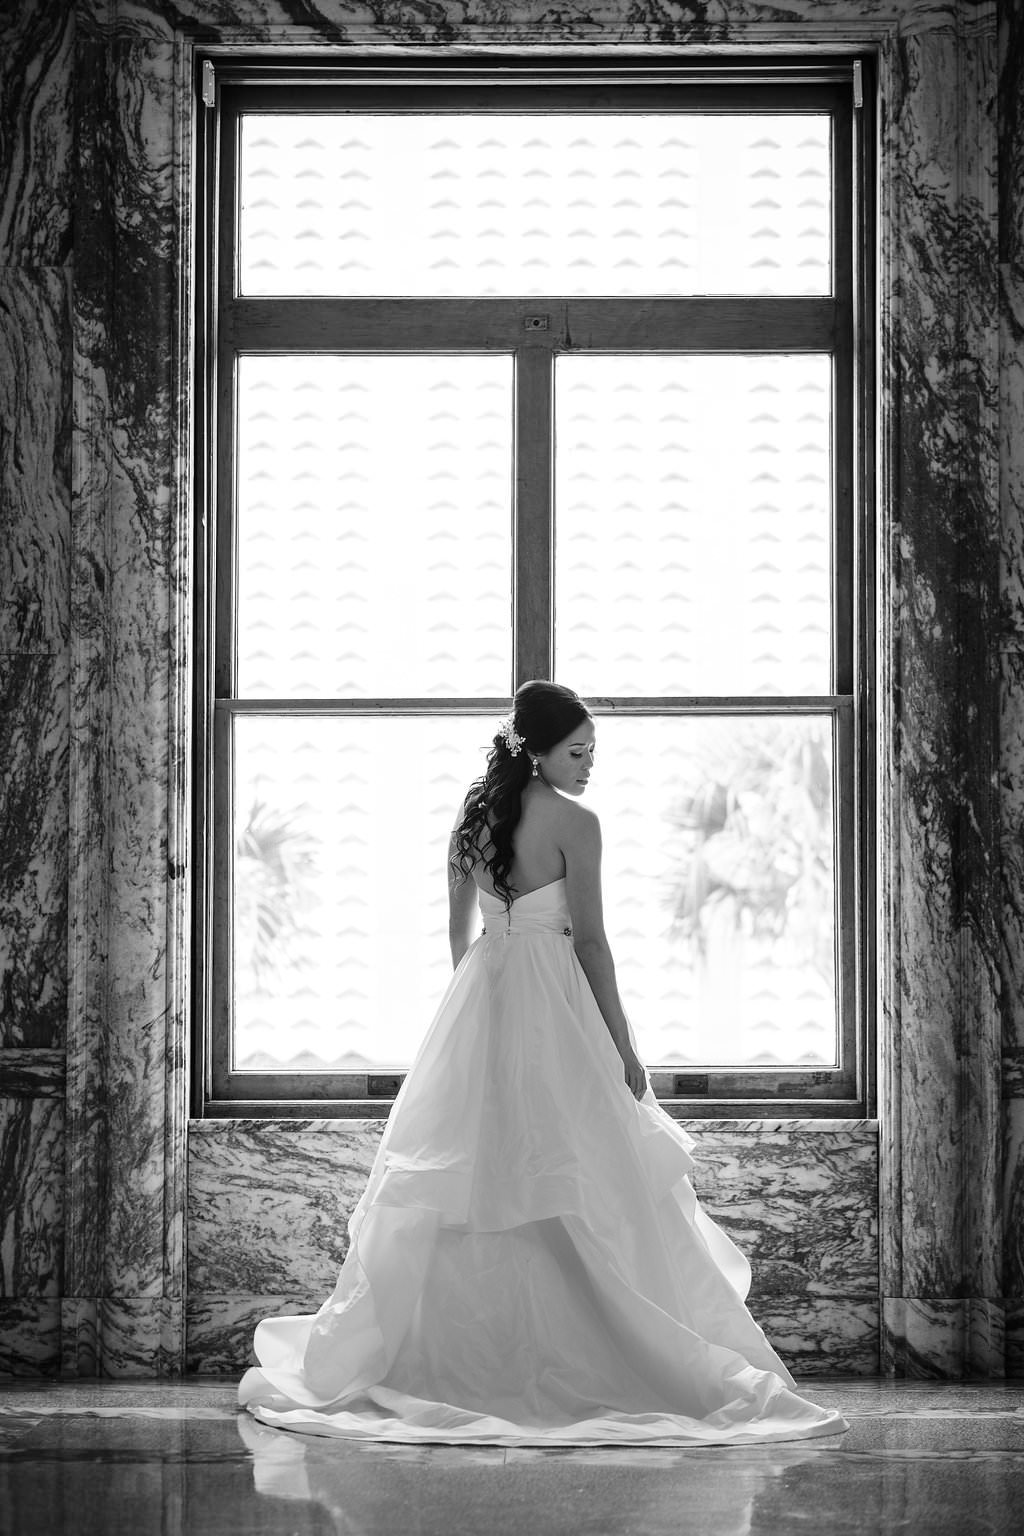 Bride Wedding Portrait in Strapless Ballgown Wedding Dress | Tampa Bay Photographer Marc Edwards Photographs | Tampa Venue Le Meridien